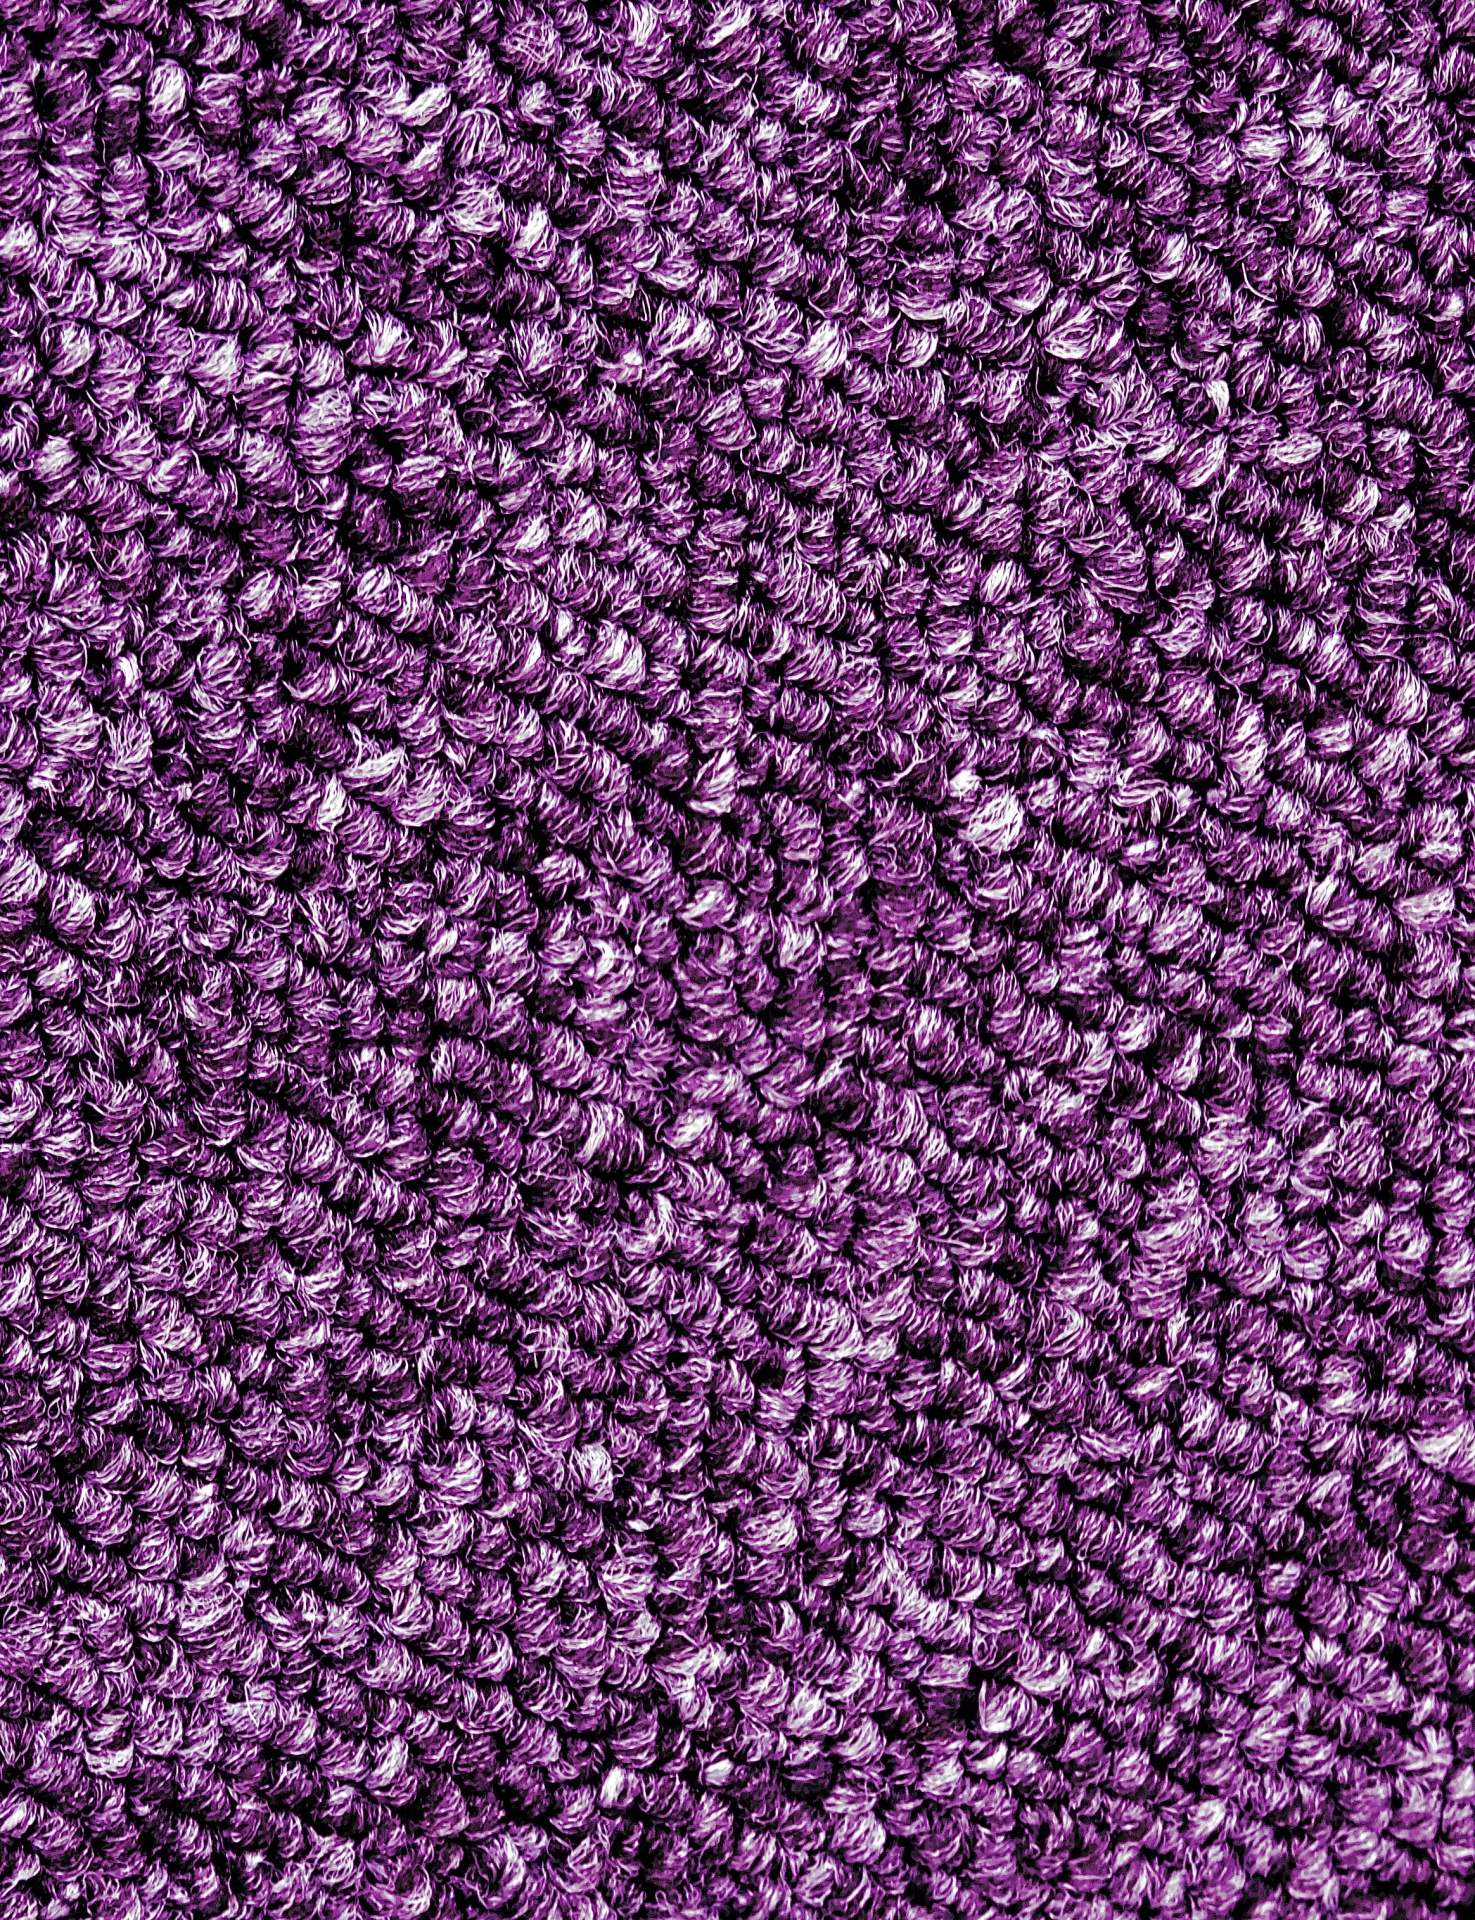 Lilac Carpet Texture Background